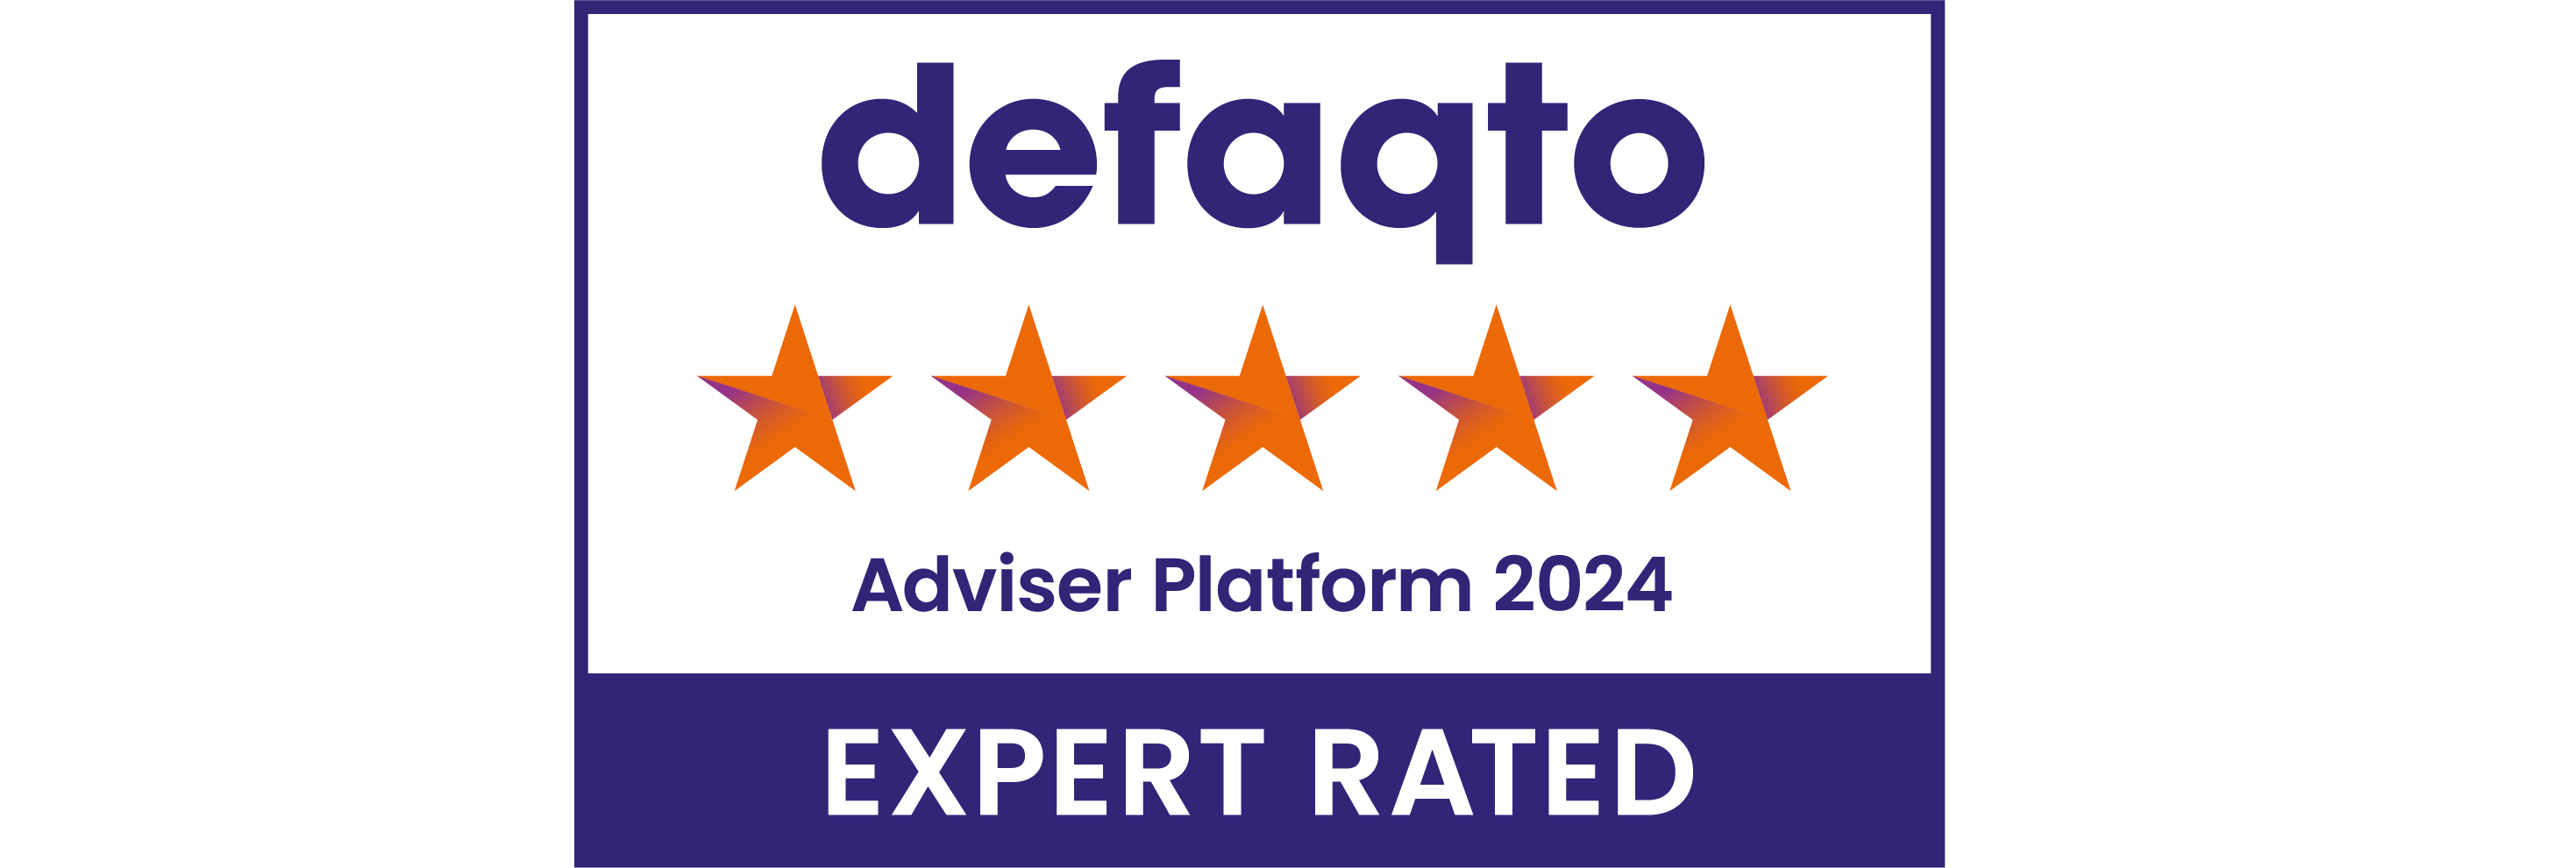 Defaqto 5 star adviser platform 2024 rating award image